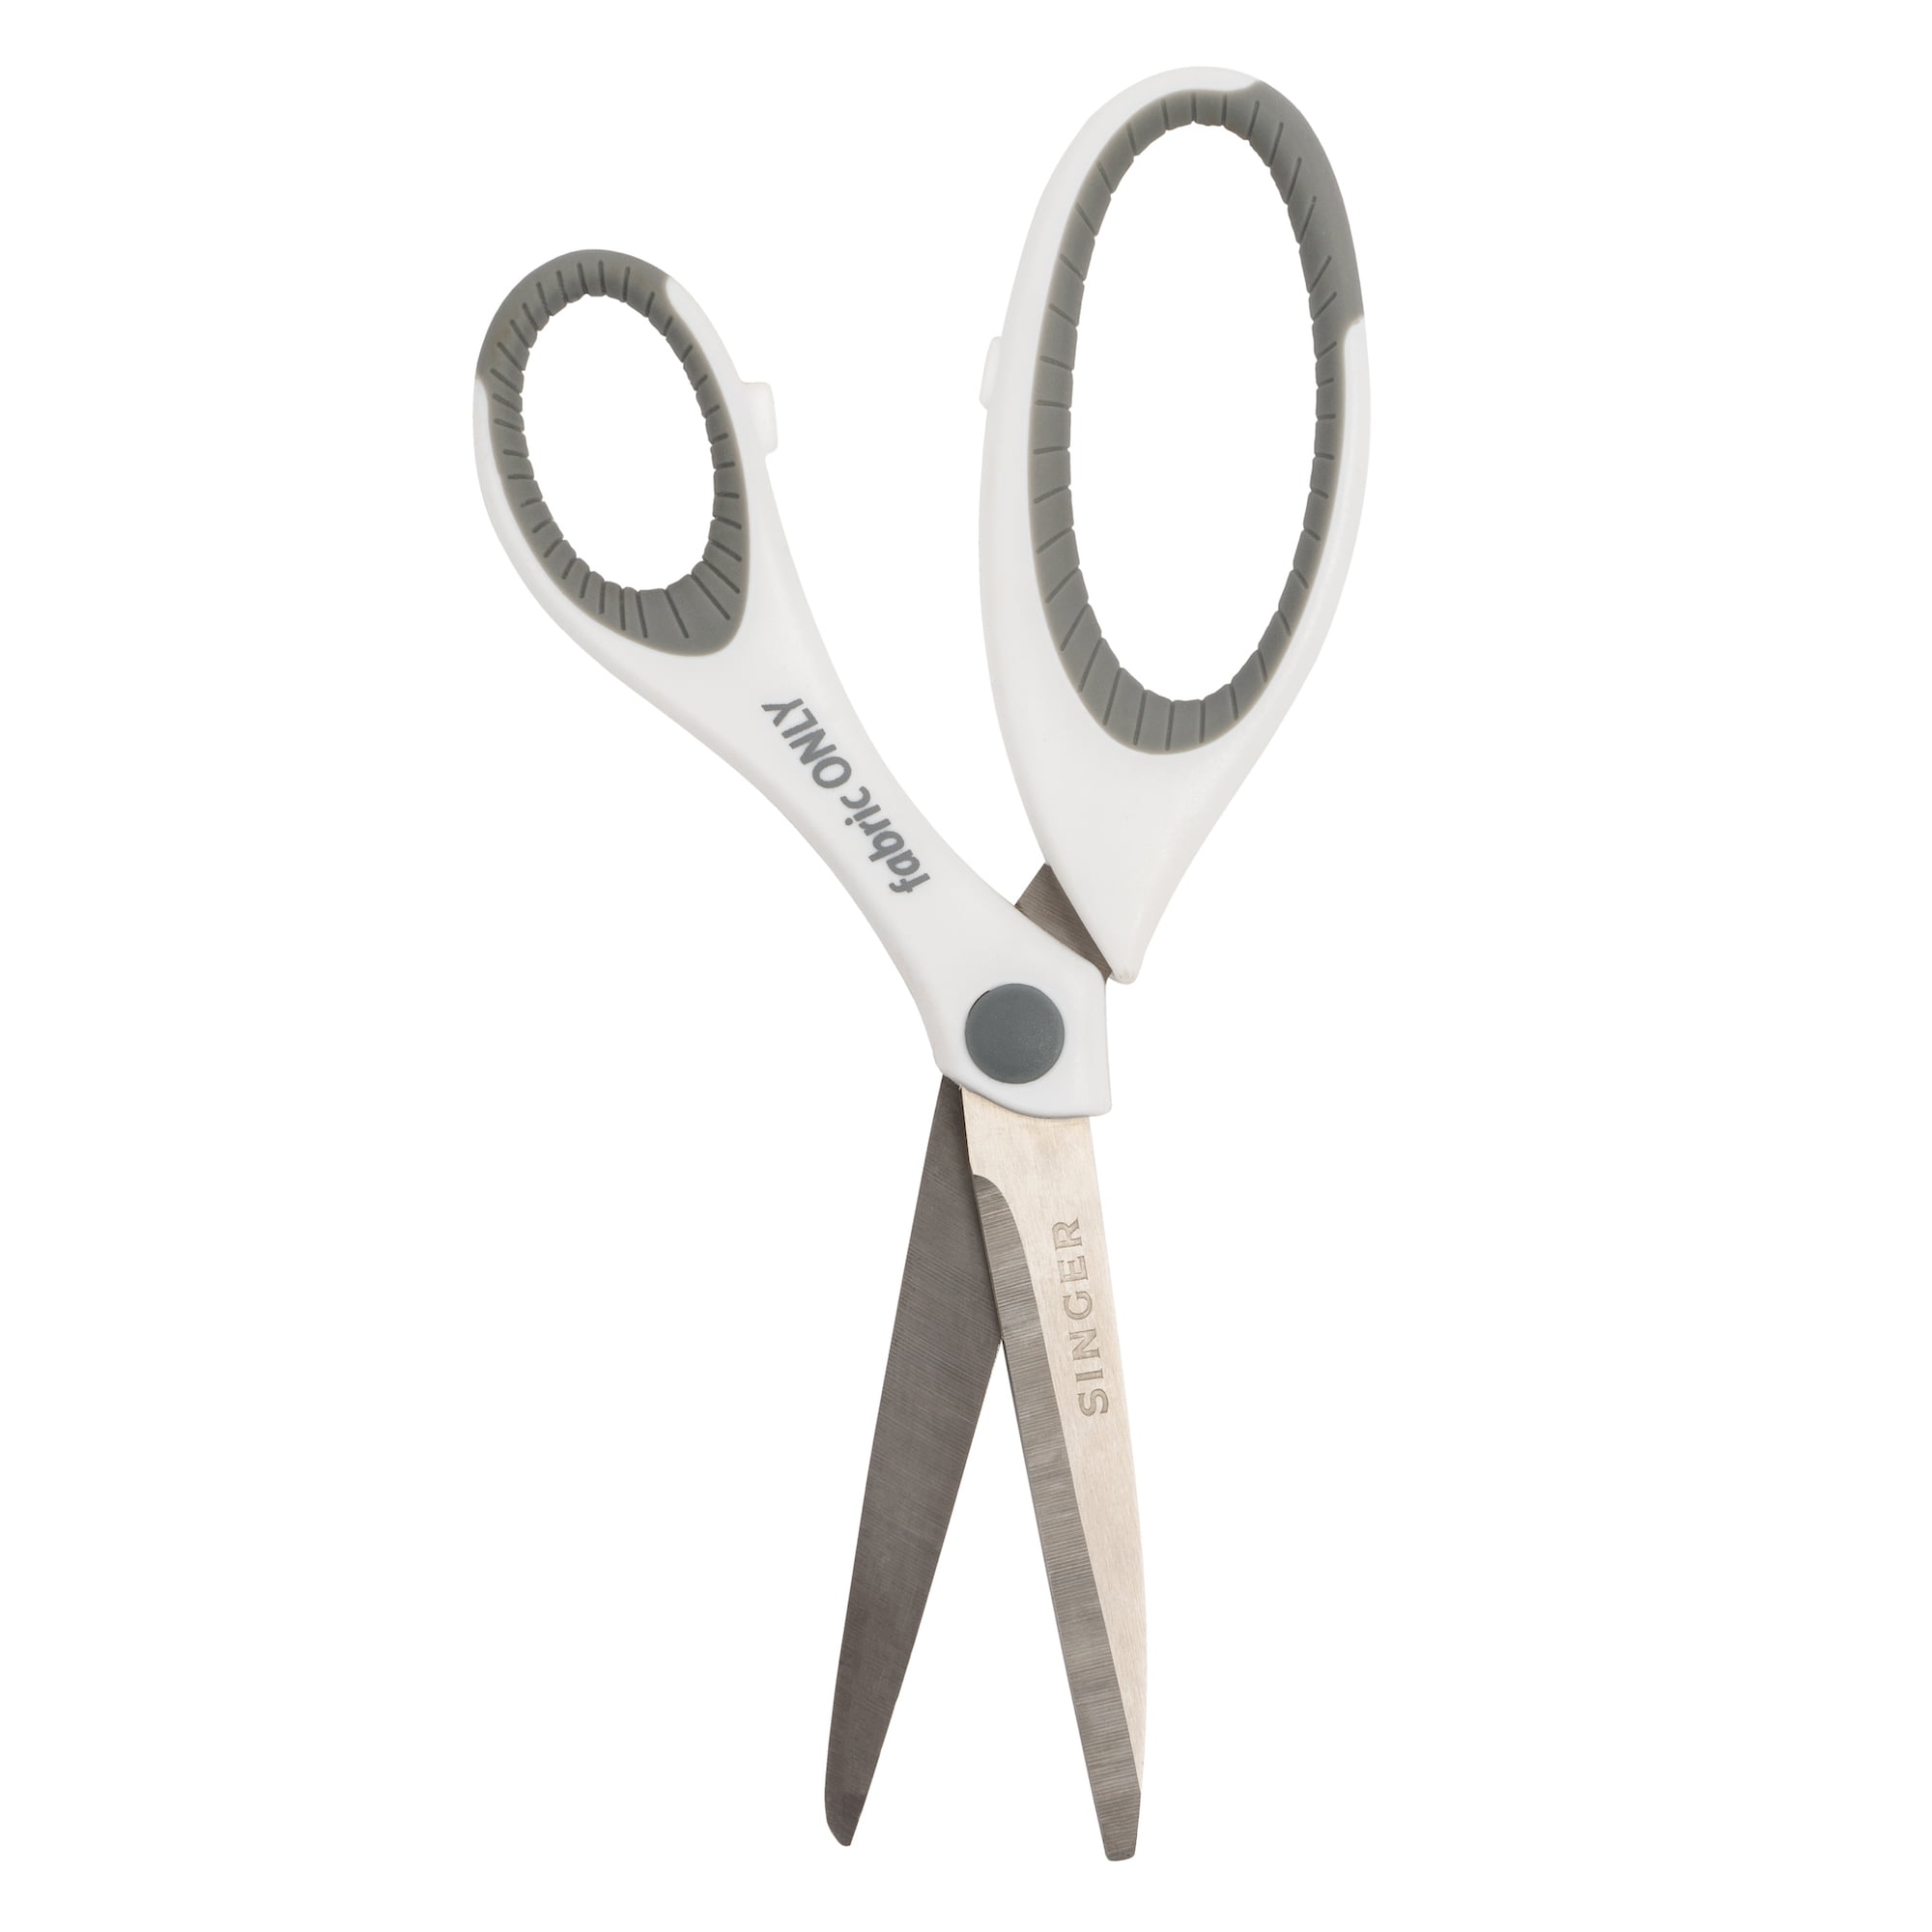 SINGER 8-1/2-Inch Fabric Scissors with Comfort Grip (00445)